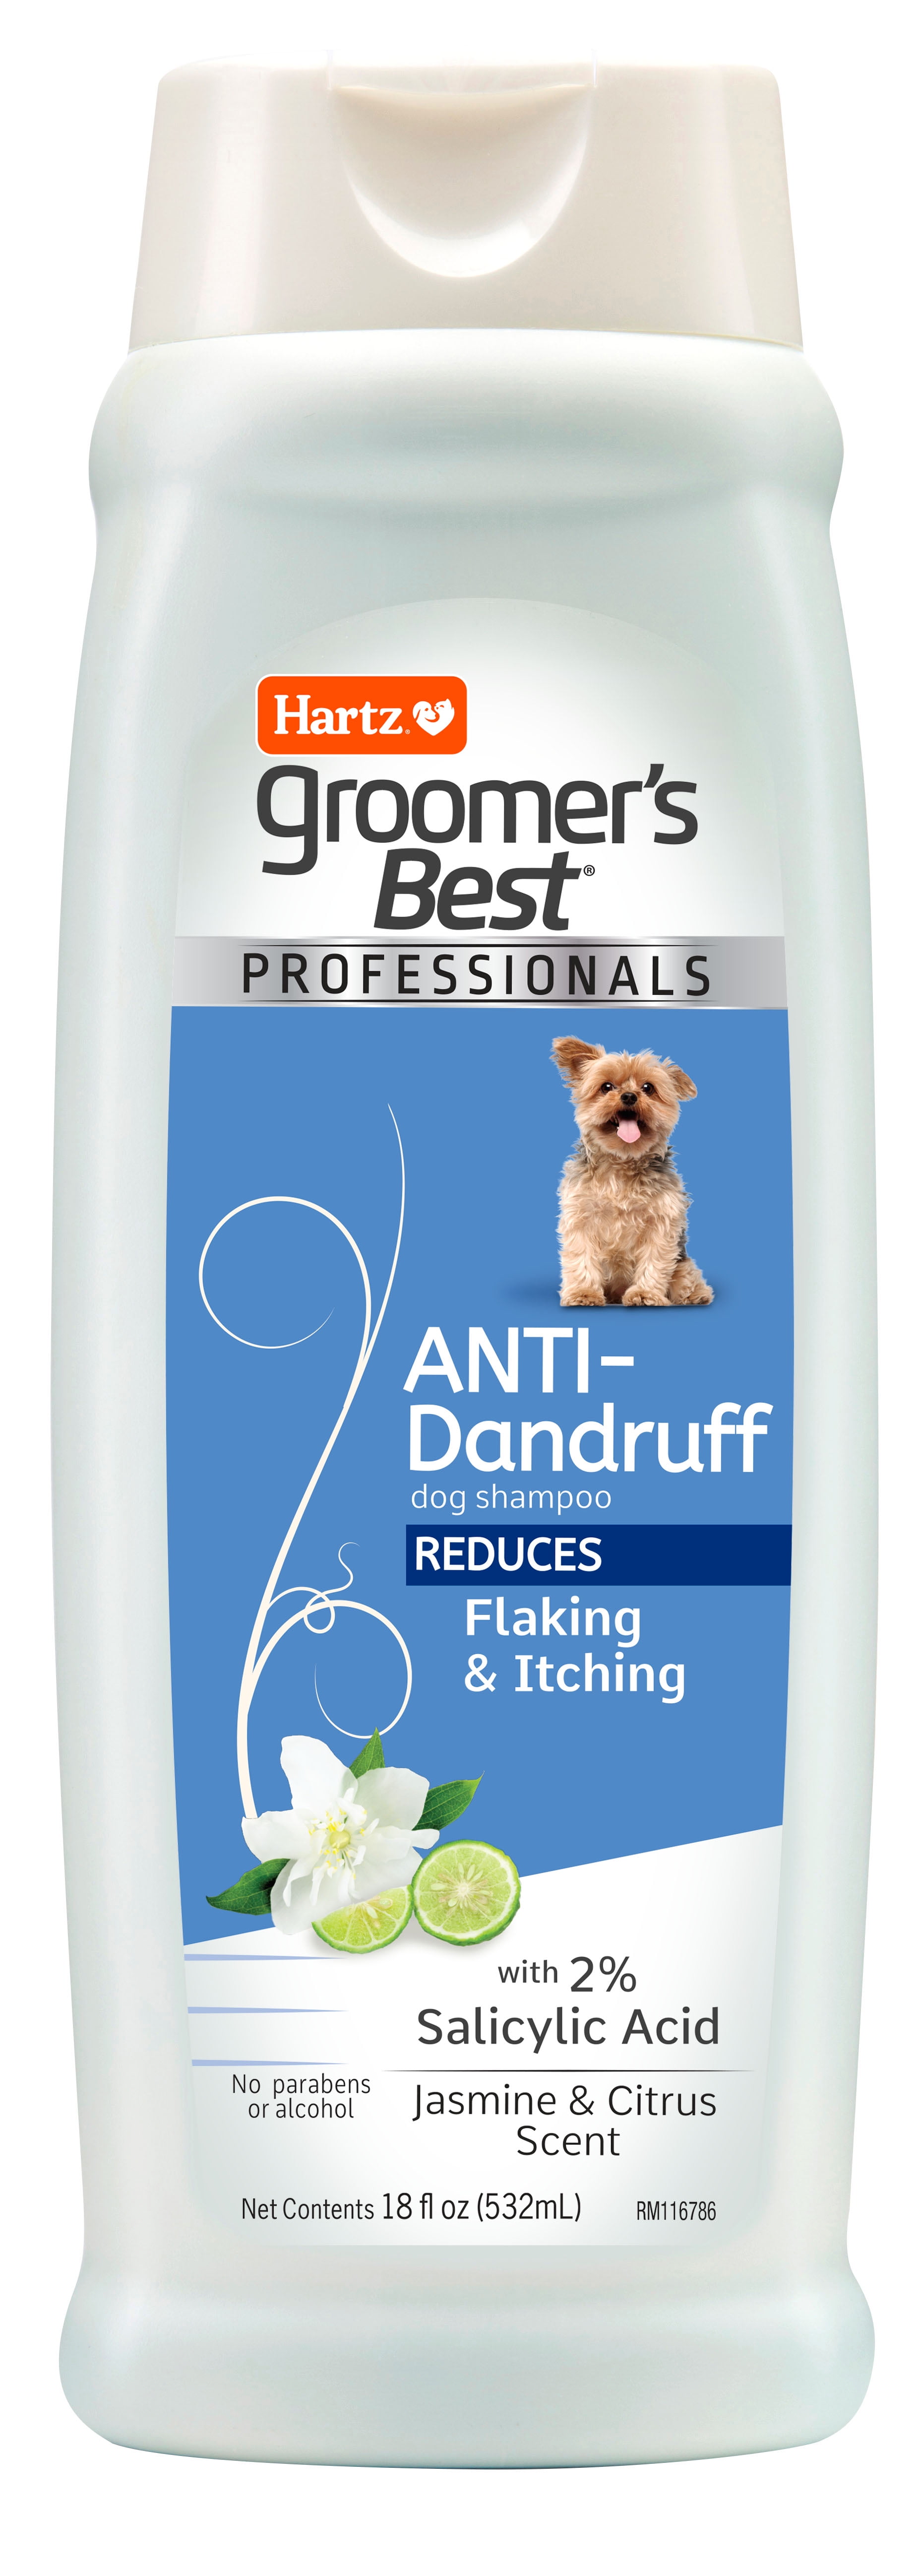 Hartz Groomer's Best PROFESSIONALS Anti-Dandruff Shampoo, 18oz